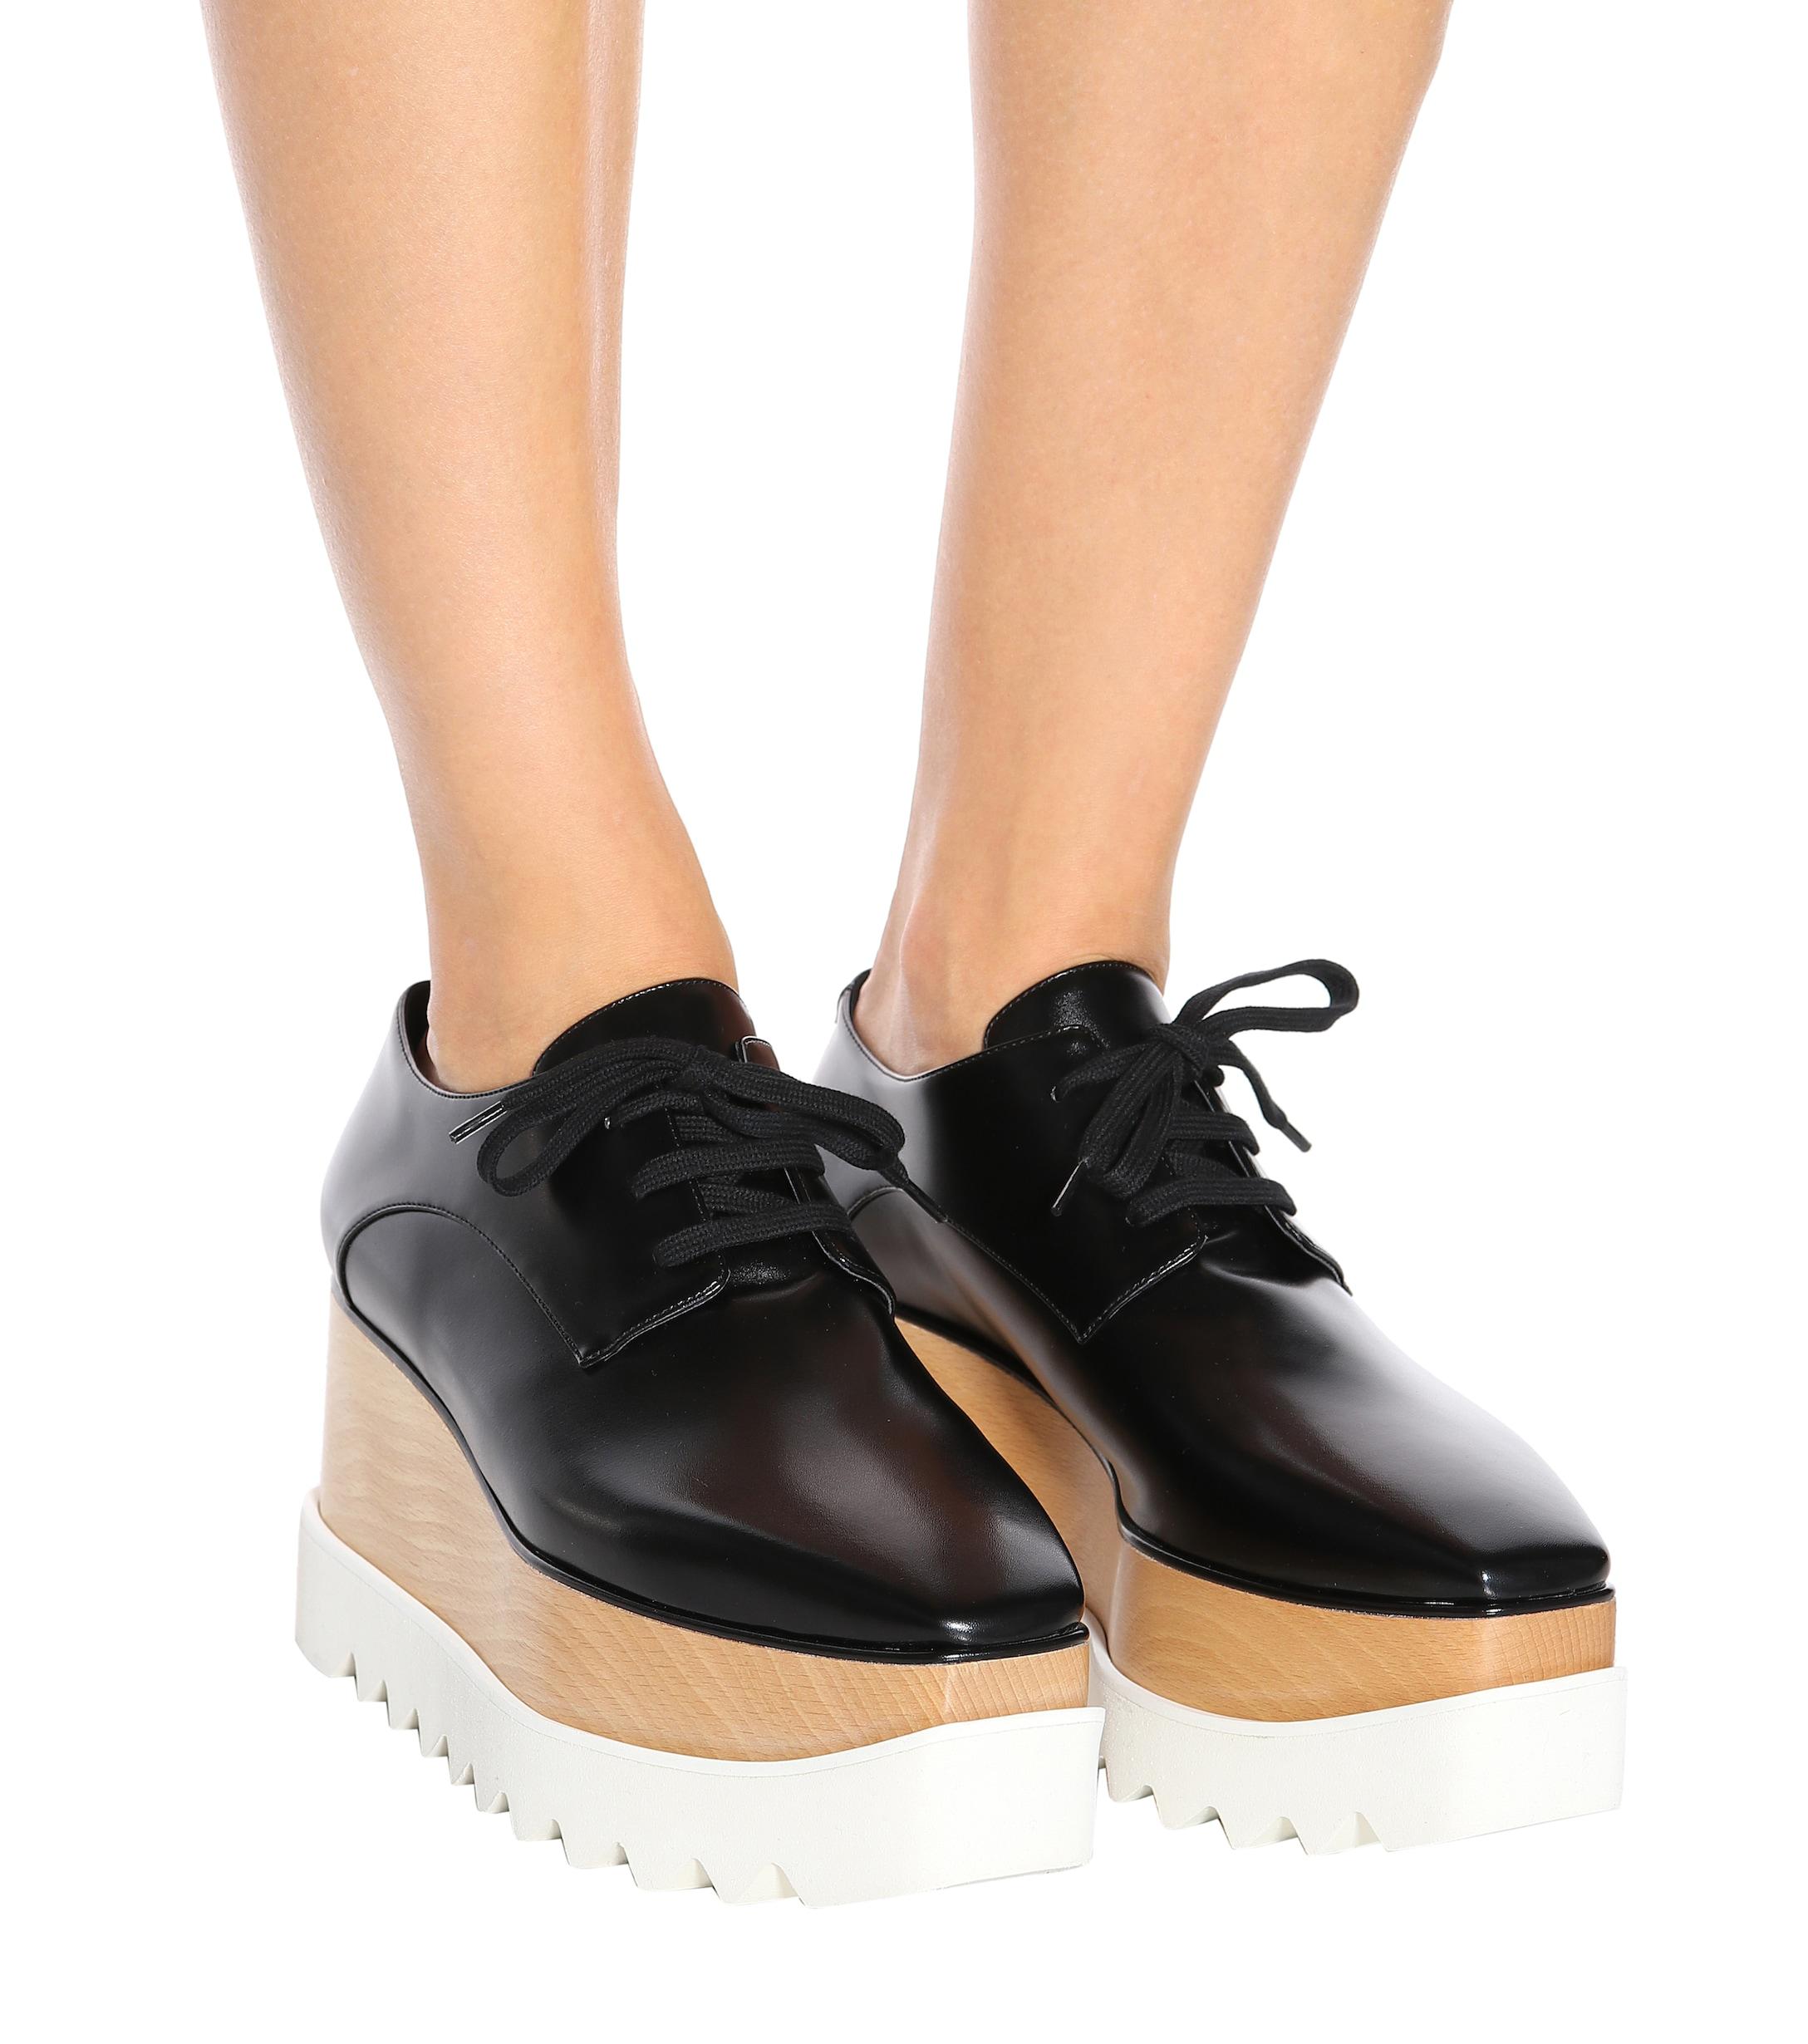 Stella McCartney Elyse Platform Derby Shoes in Black - Lyst